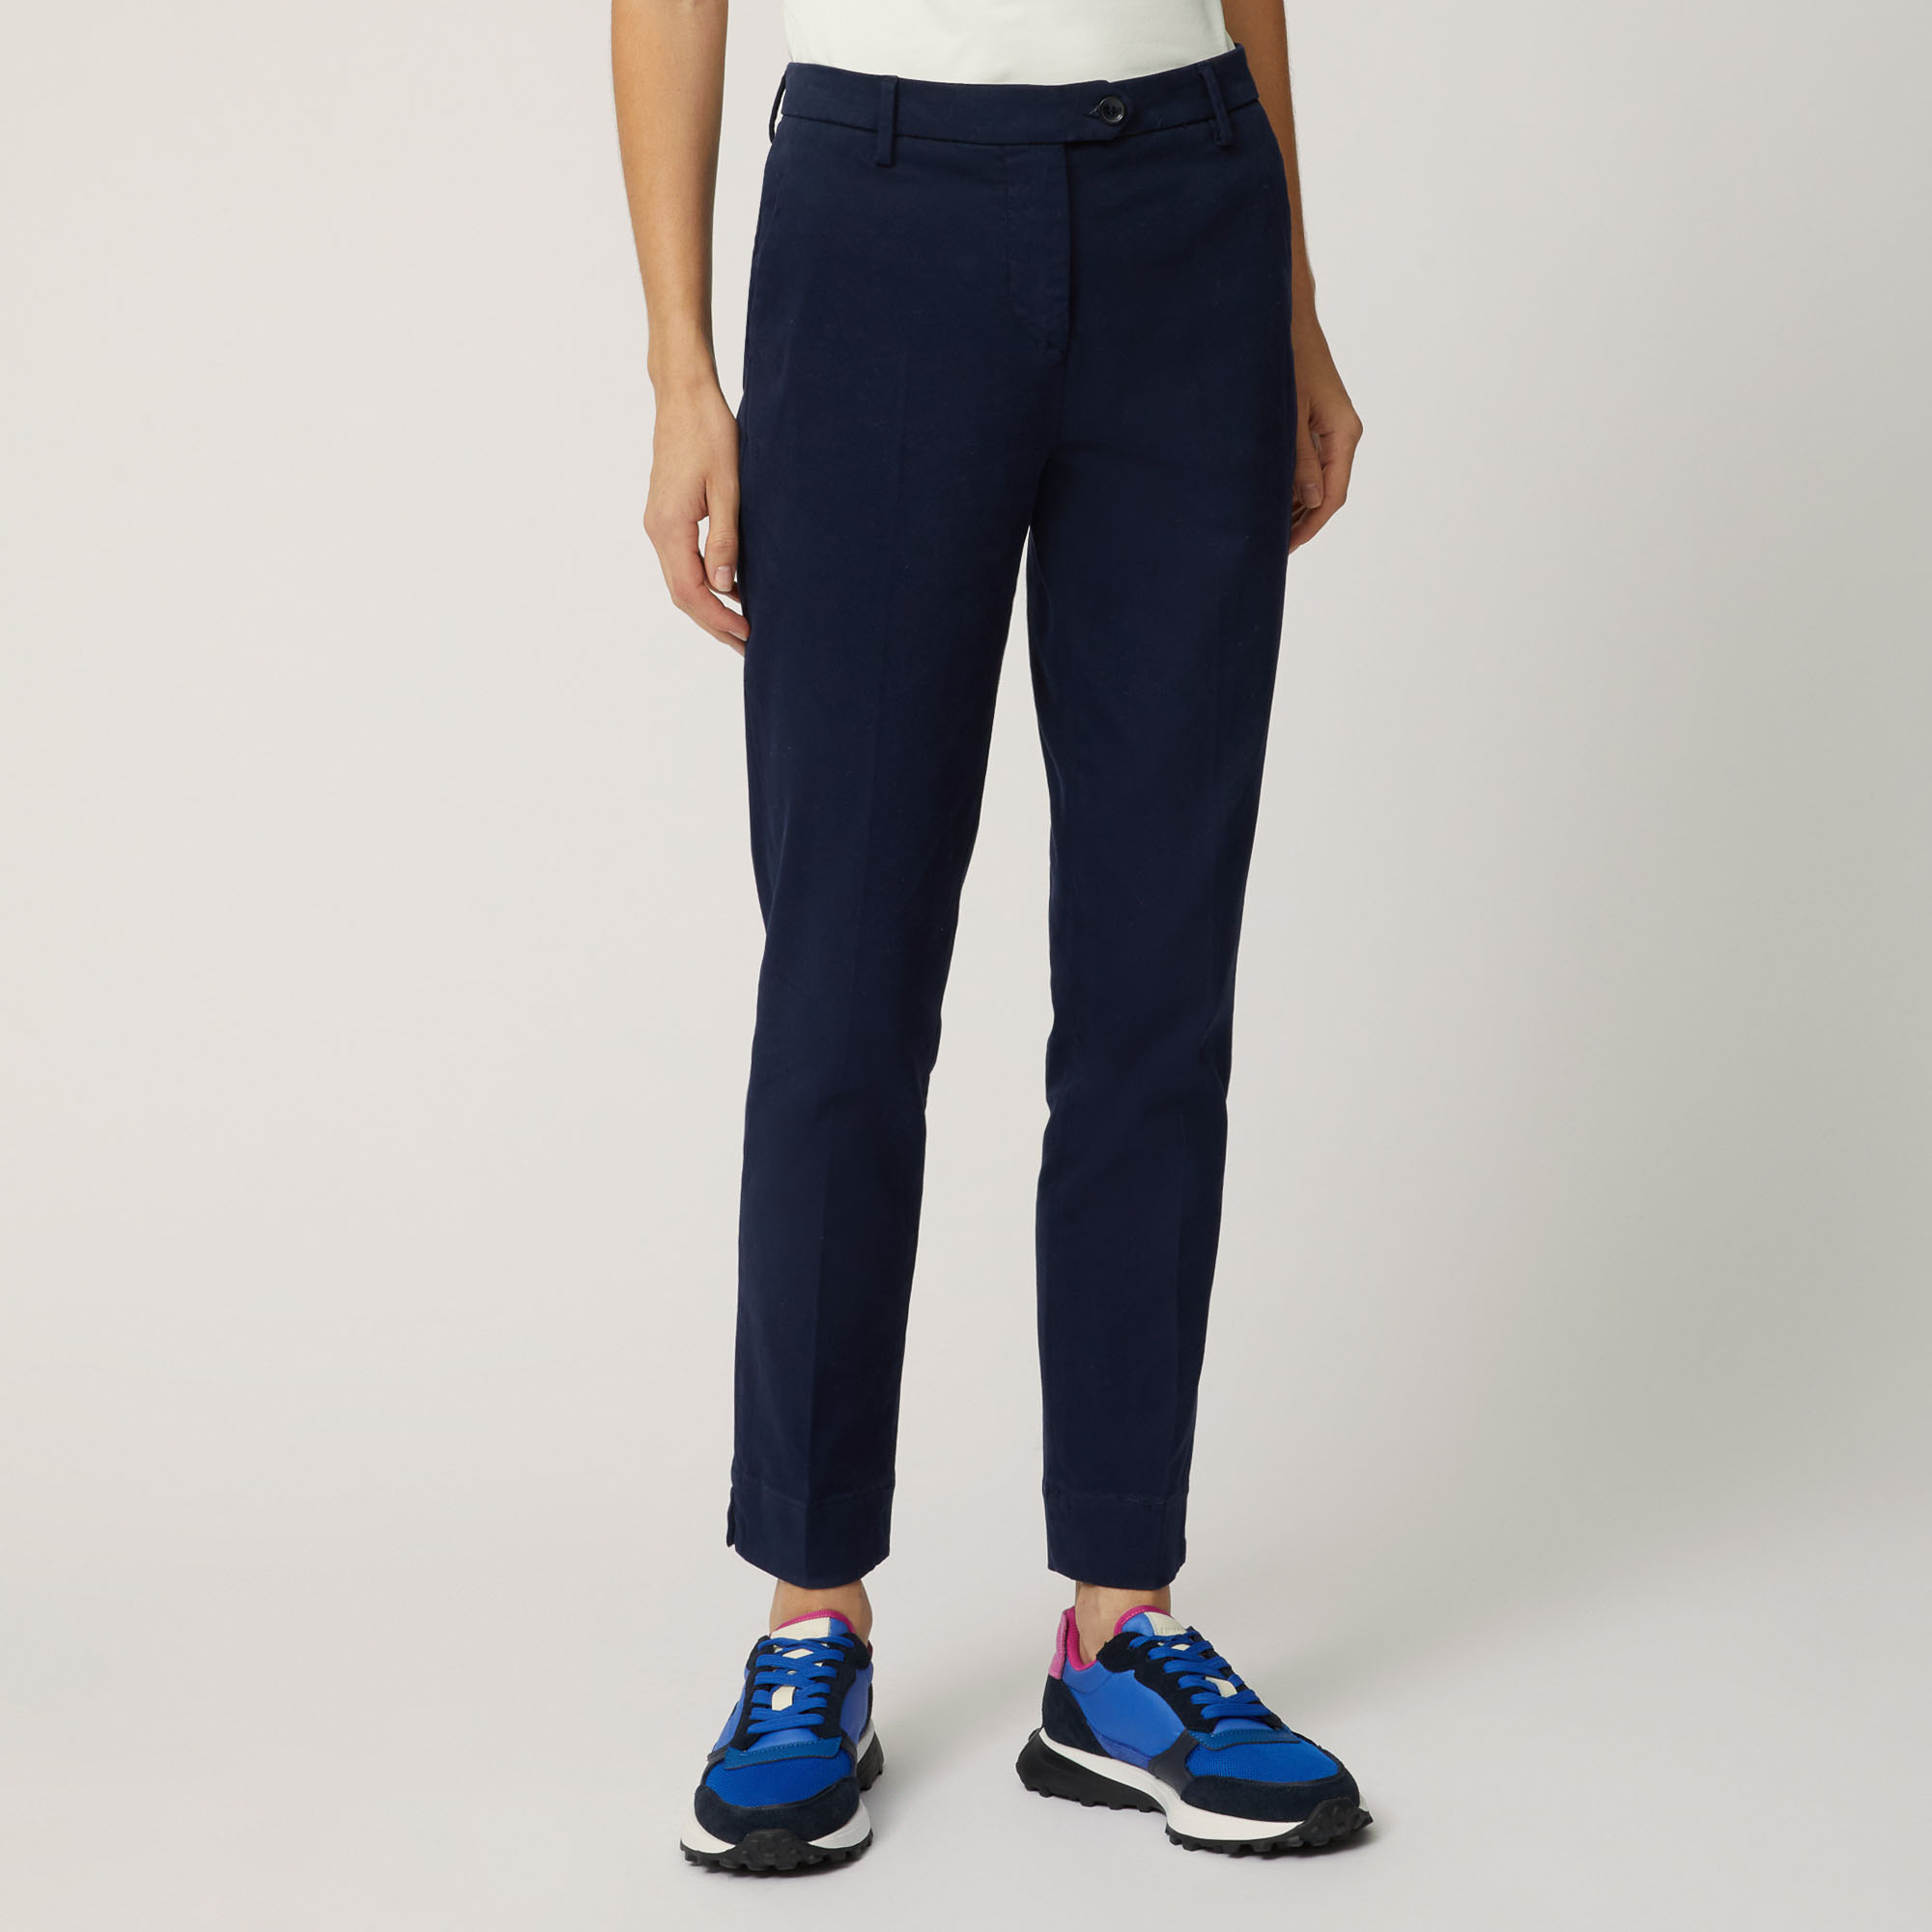 Pantalone Chino In Cotone Stretch, Blu Navy, large